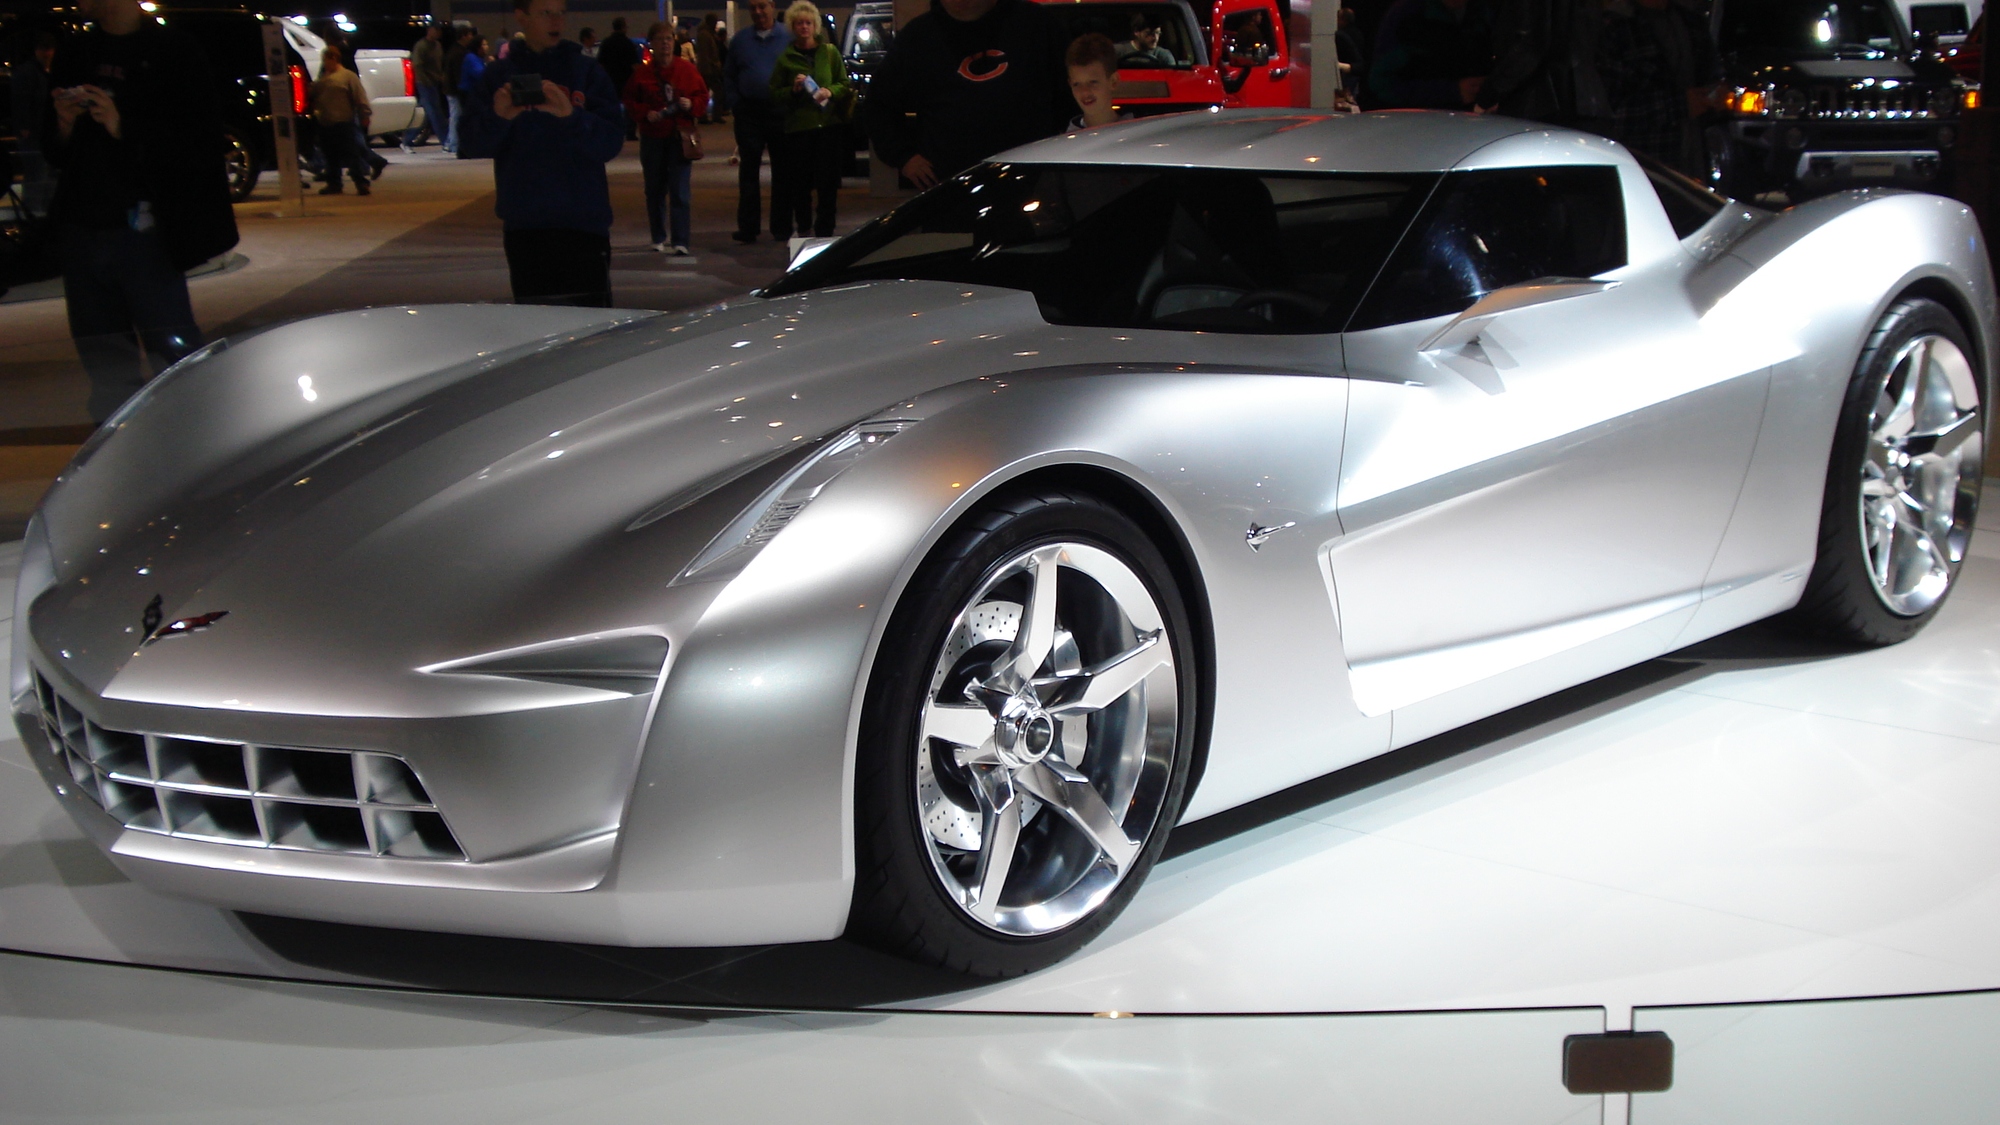 Corvette Of The Day: 2009 Chevrolet Corvette Stingray Concept